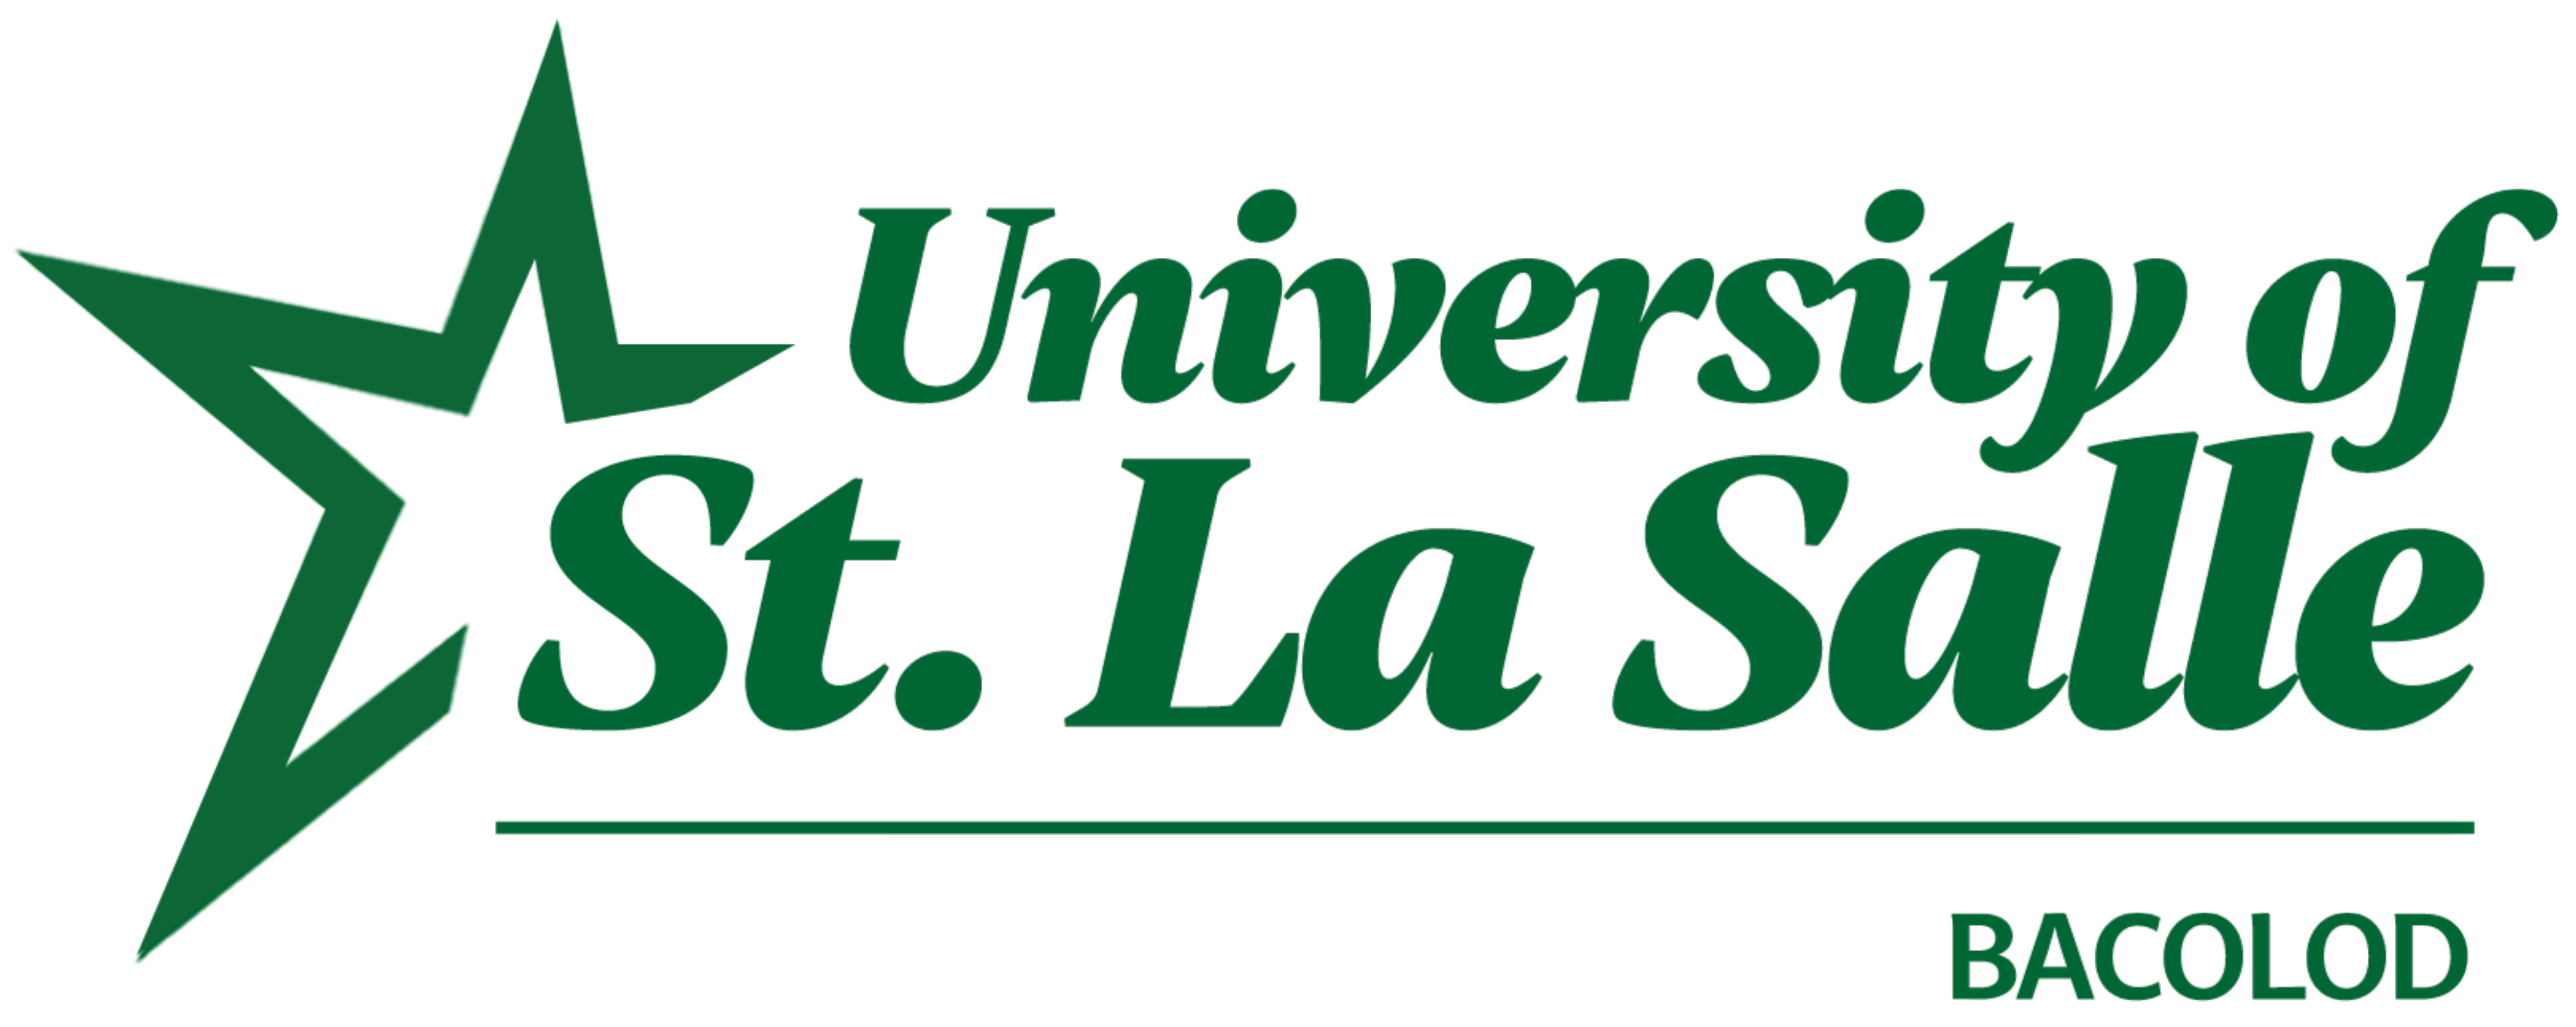 USLS logo